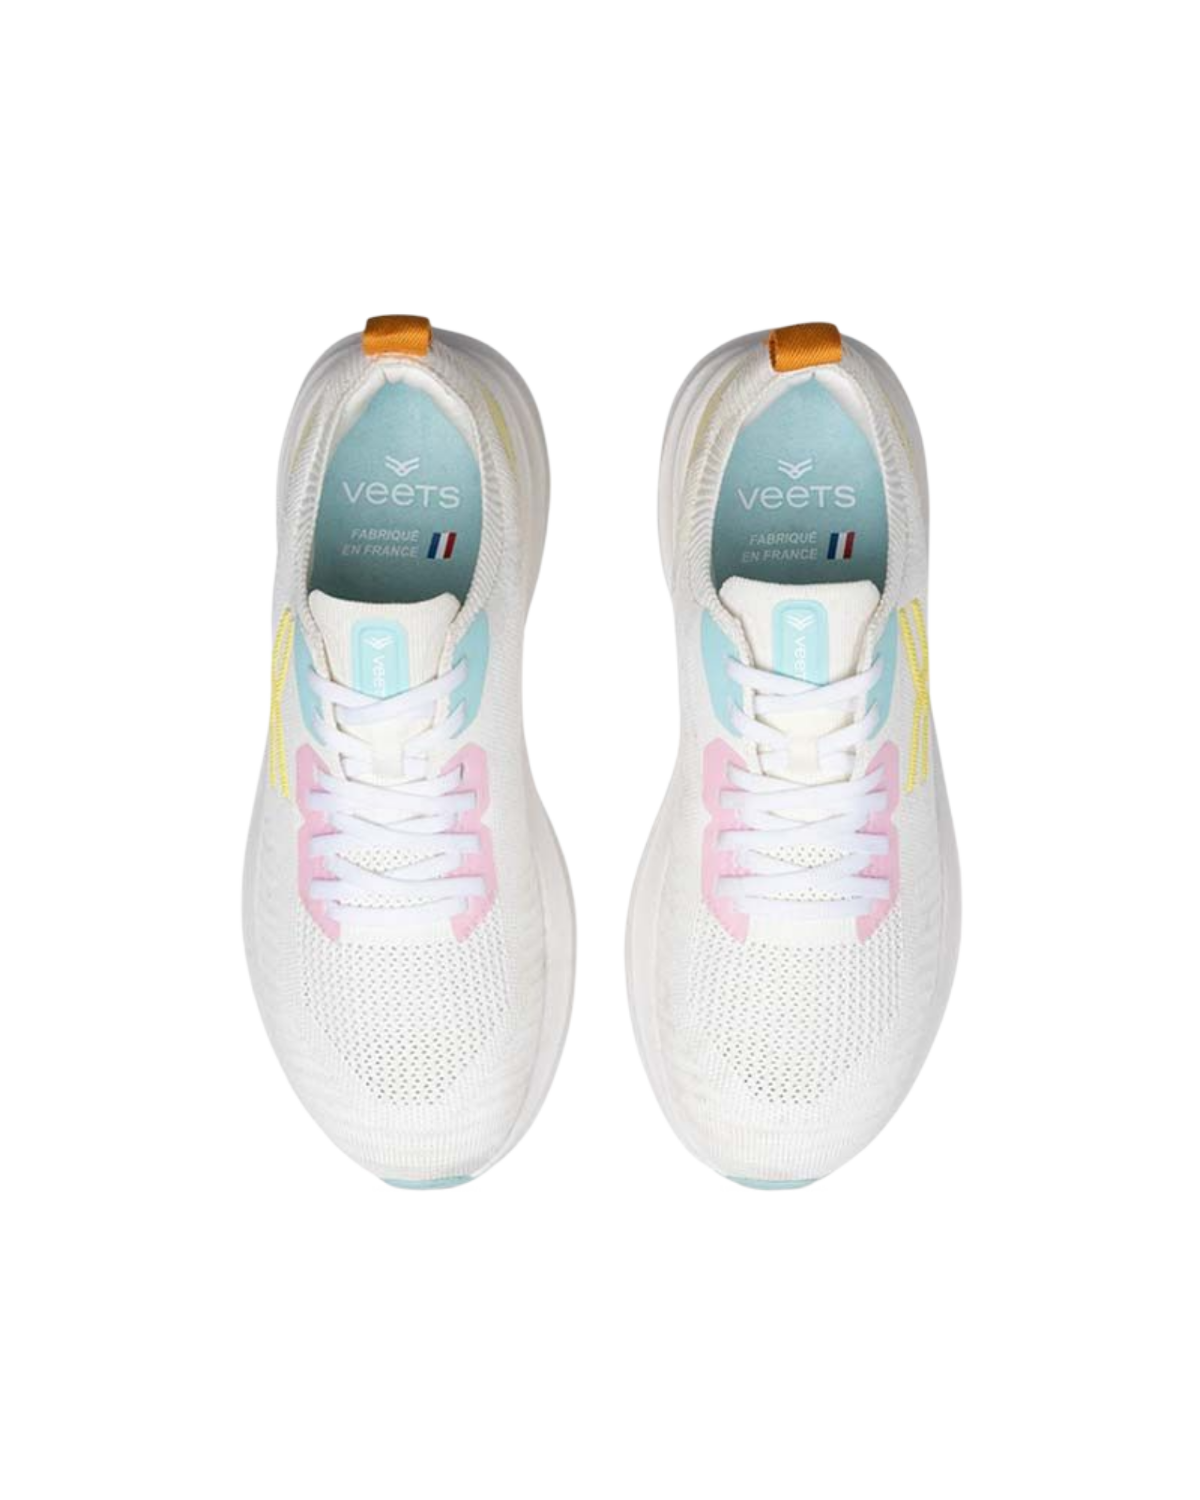 Chaussures de Running Veets Transition Knit Mif 1 Femme Blanc/Jaune, vue dessus